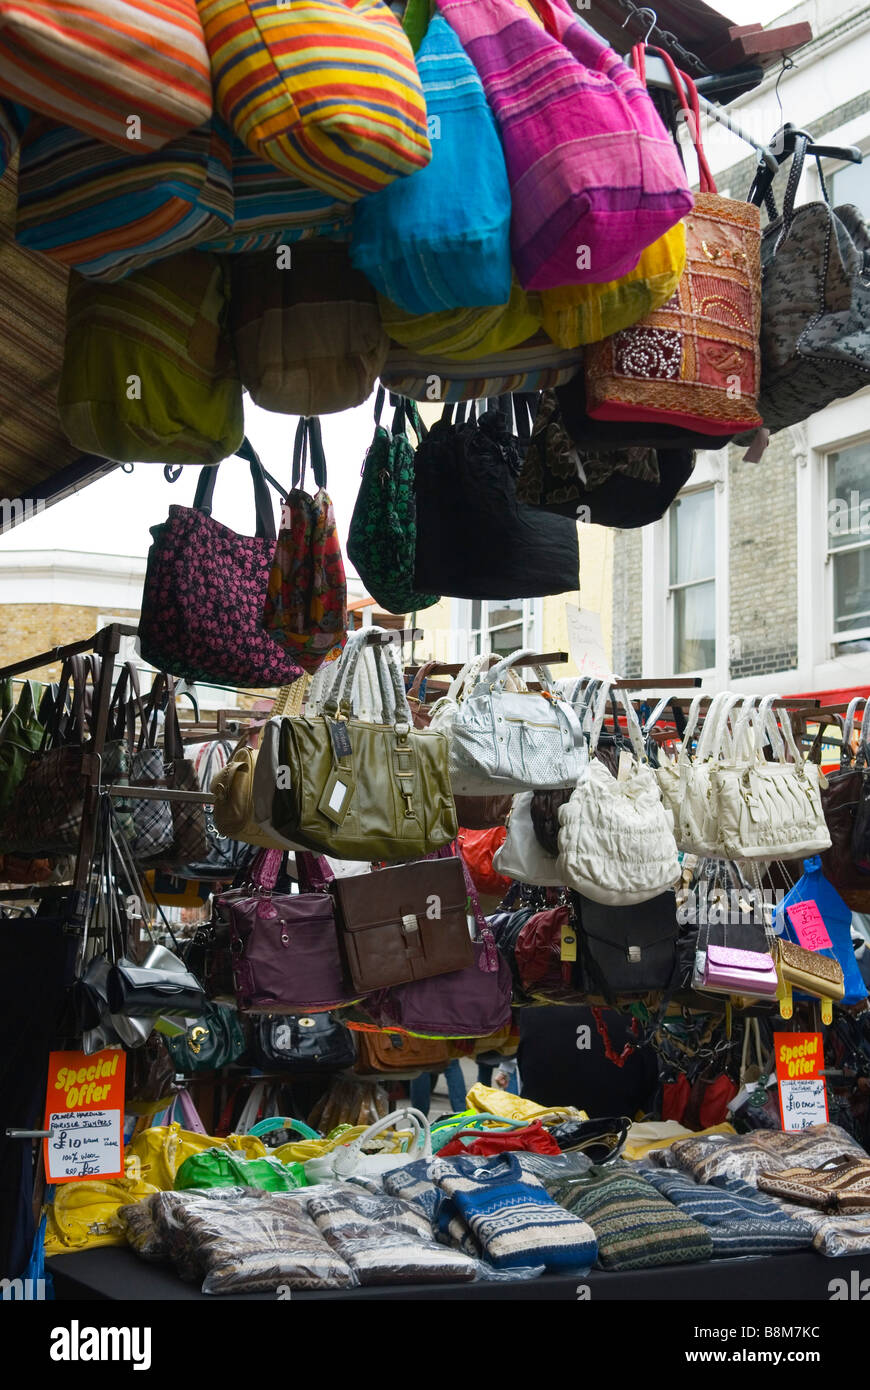 Stall selling bags at Portobello market Stock Photo - Alamy